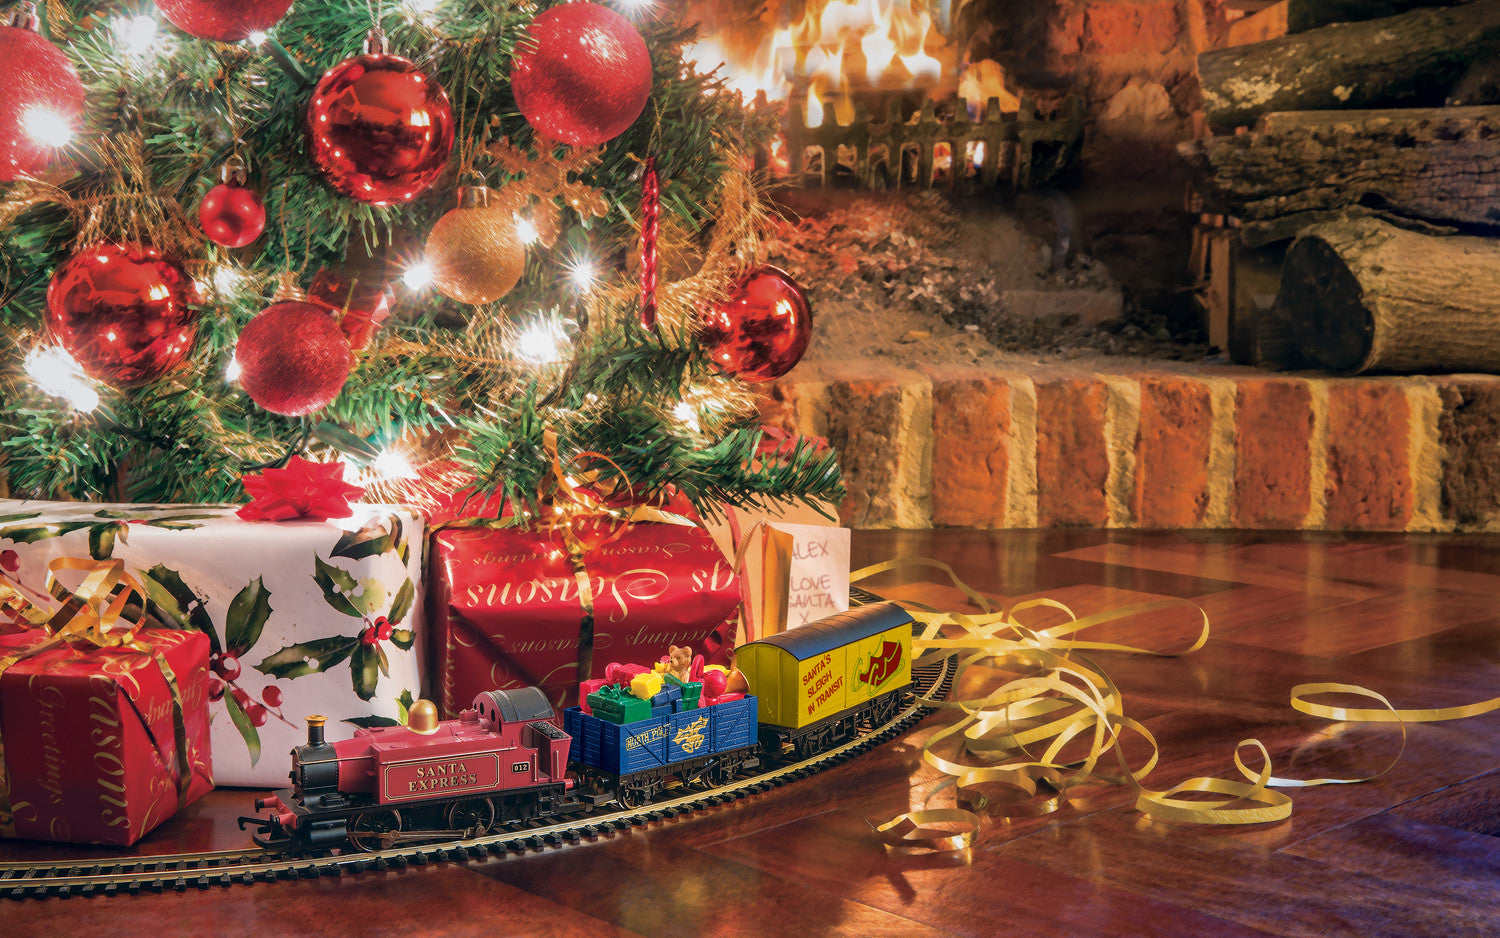 Hornby Santas Express Train Set